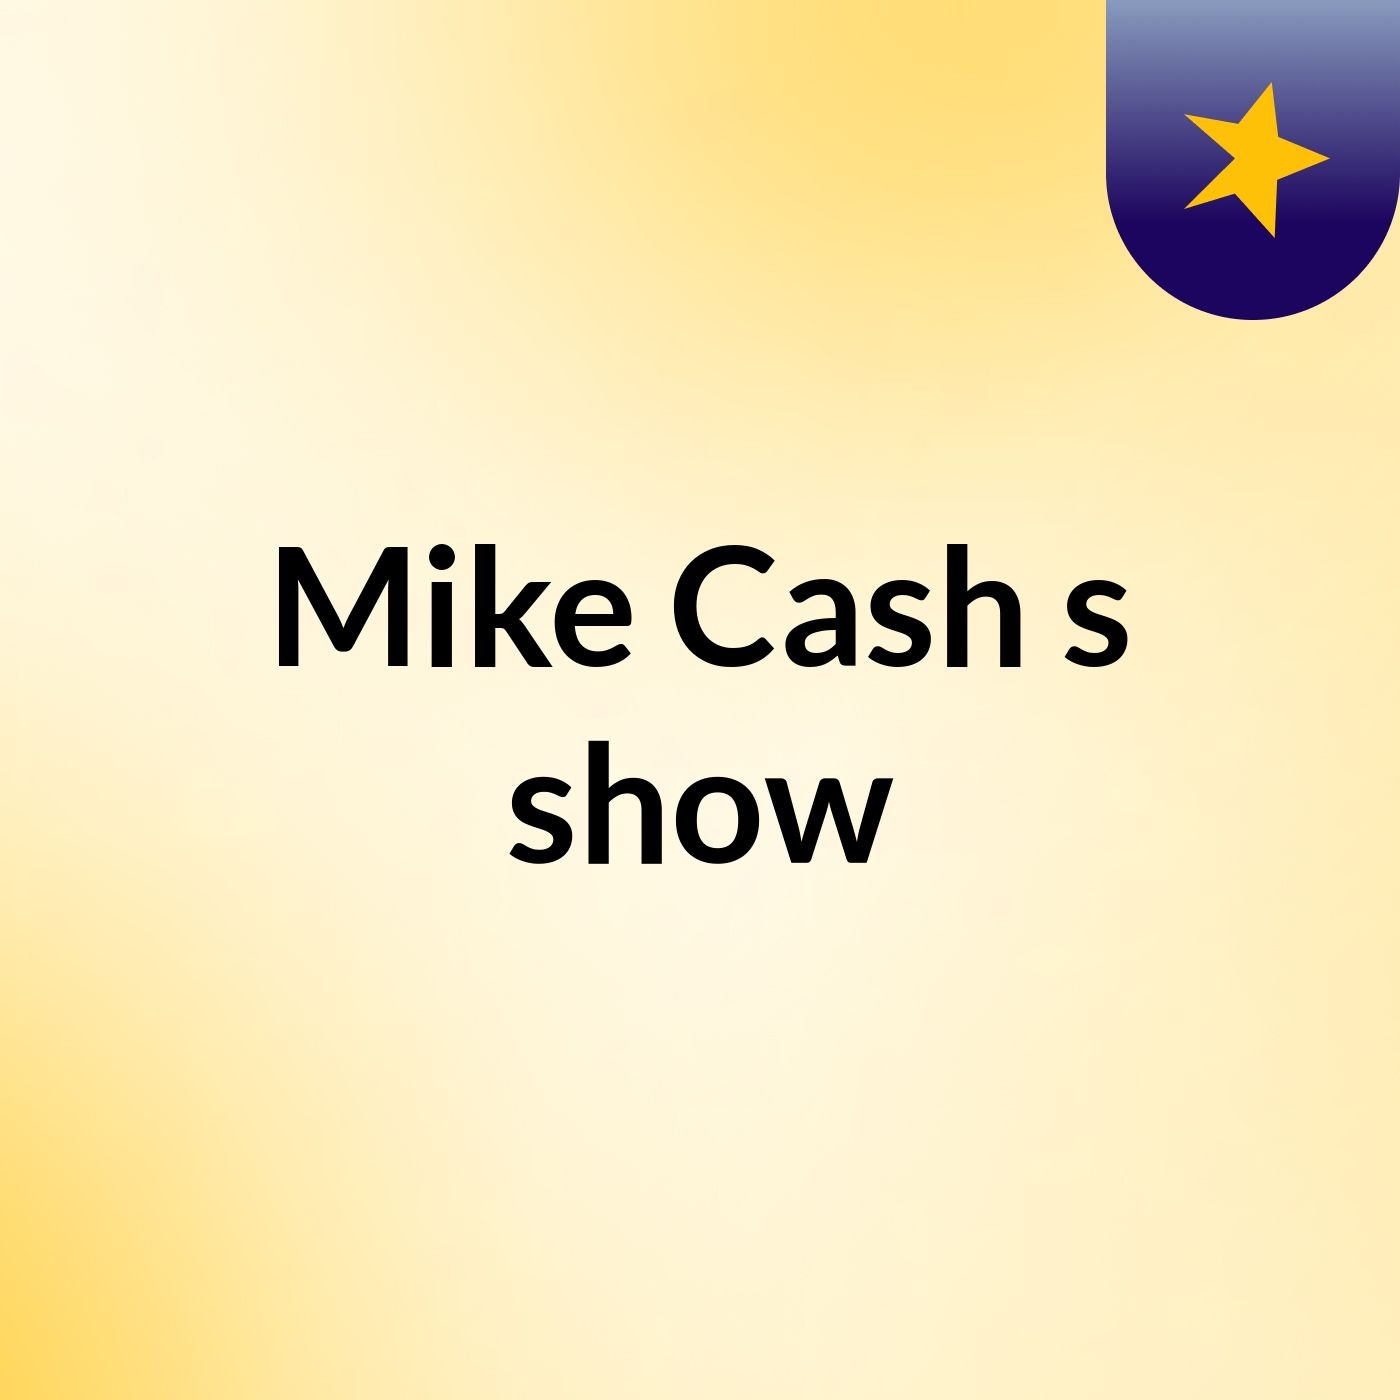 Mike Cash's show